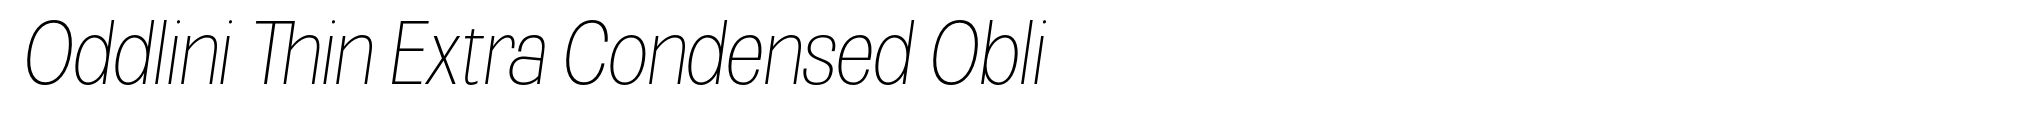 Oddlini Thin Extra Condensed Obli image